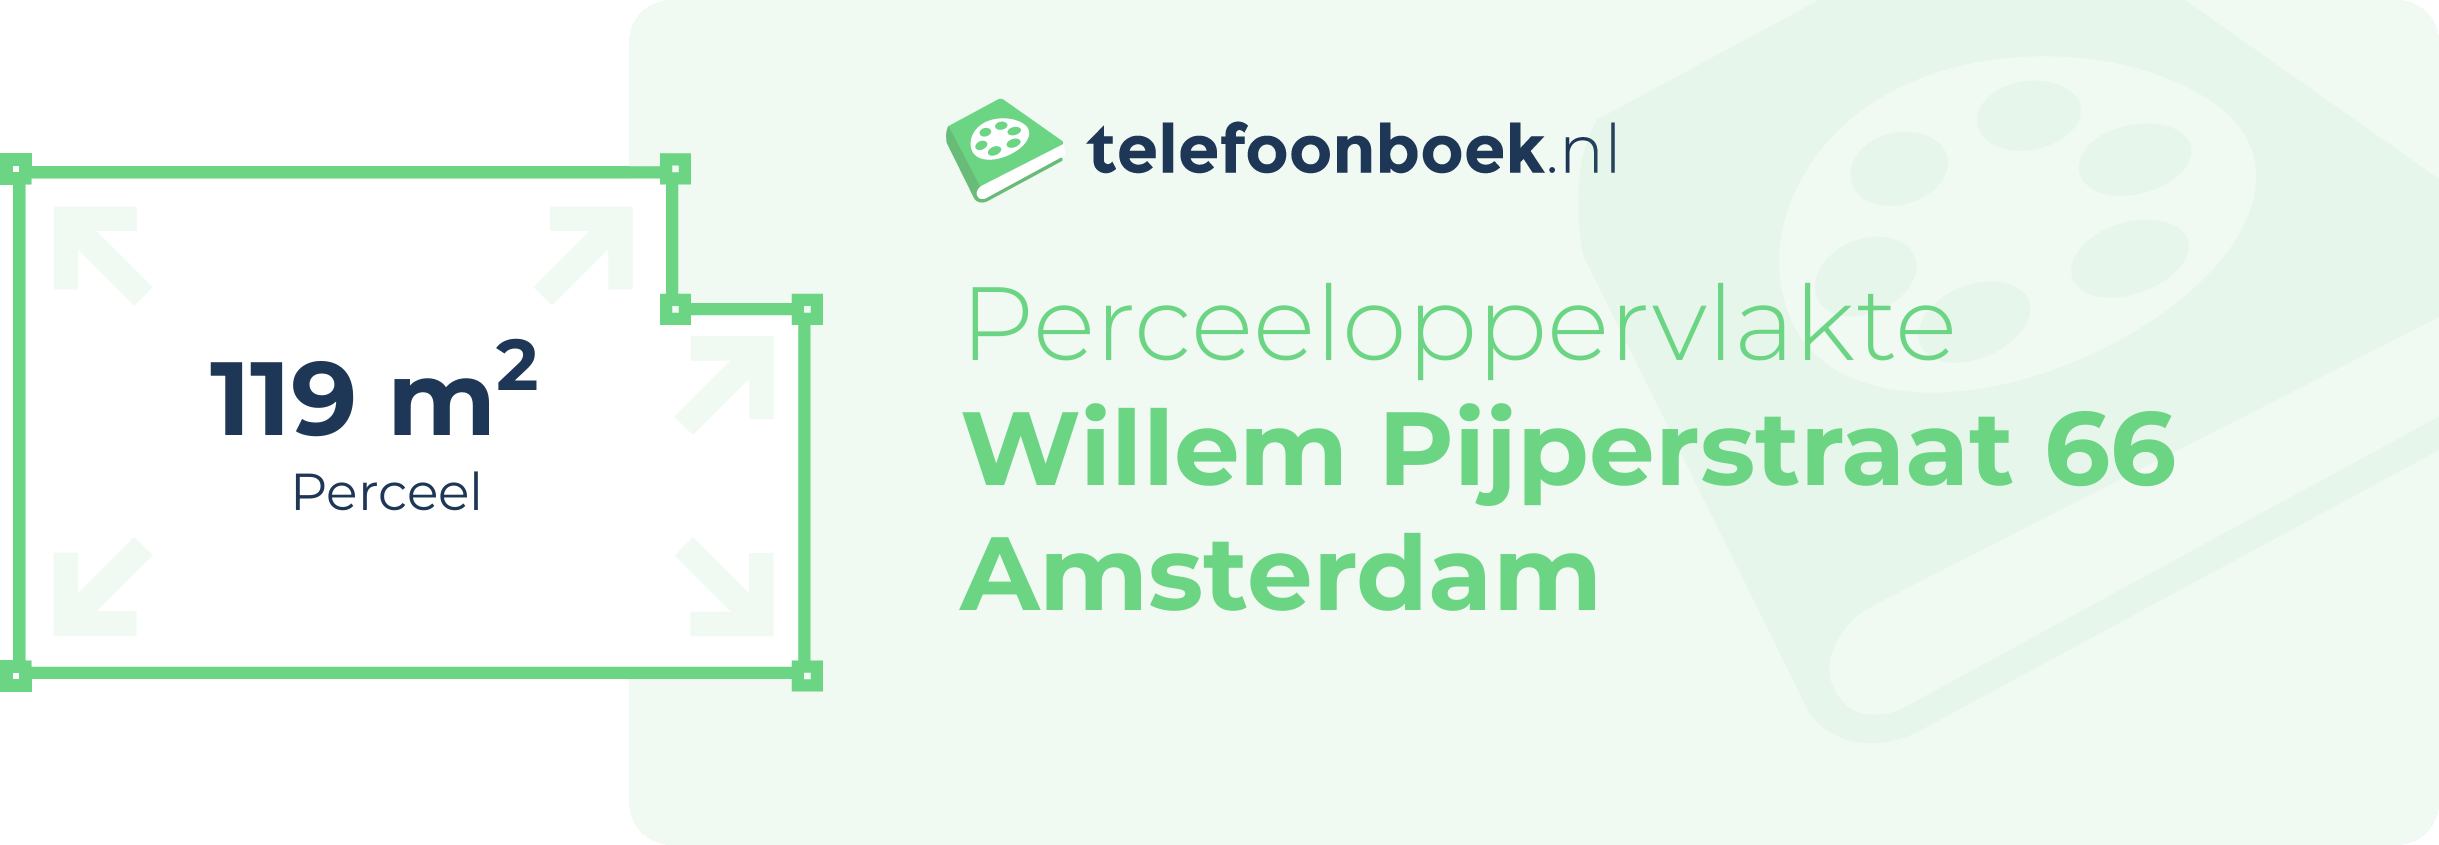 Perceeloppervlakte Willem Pijperstraat 66 Amsterdam